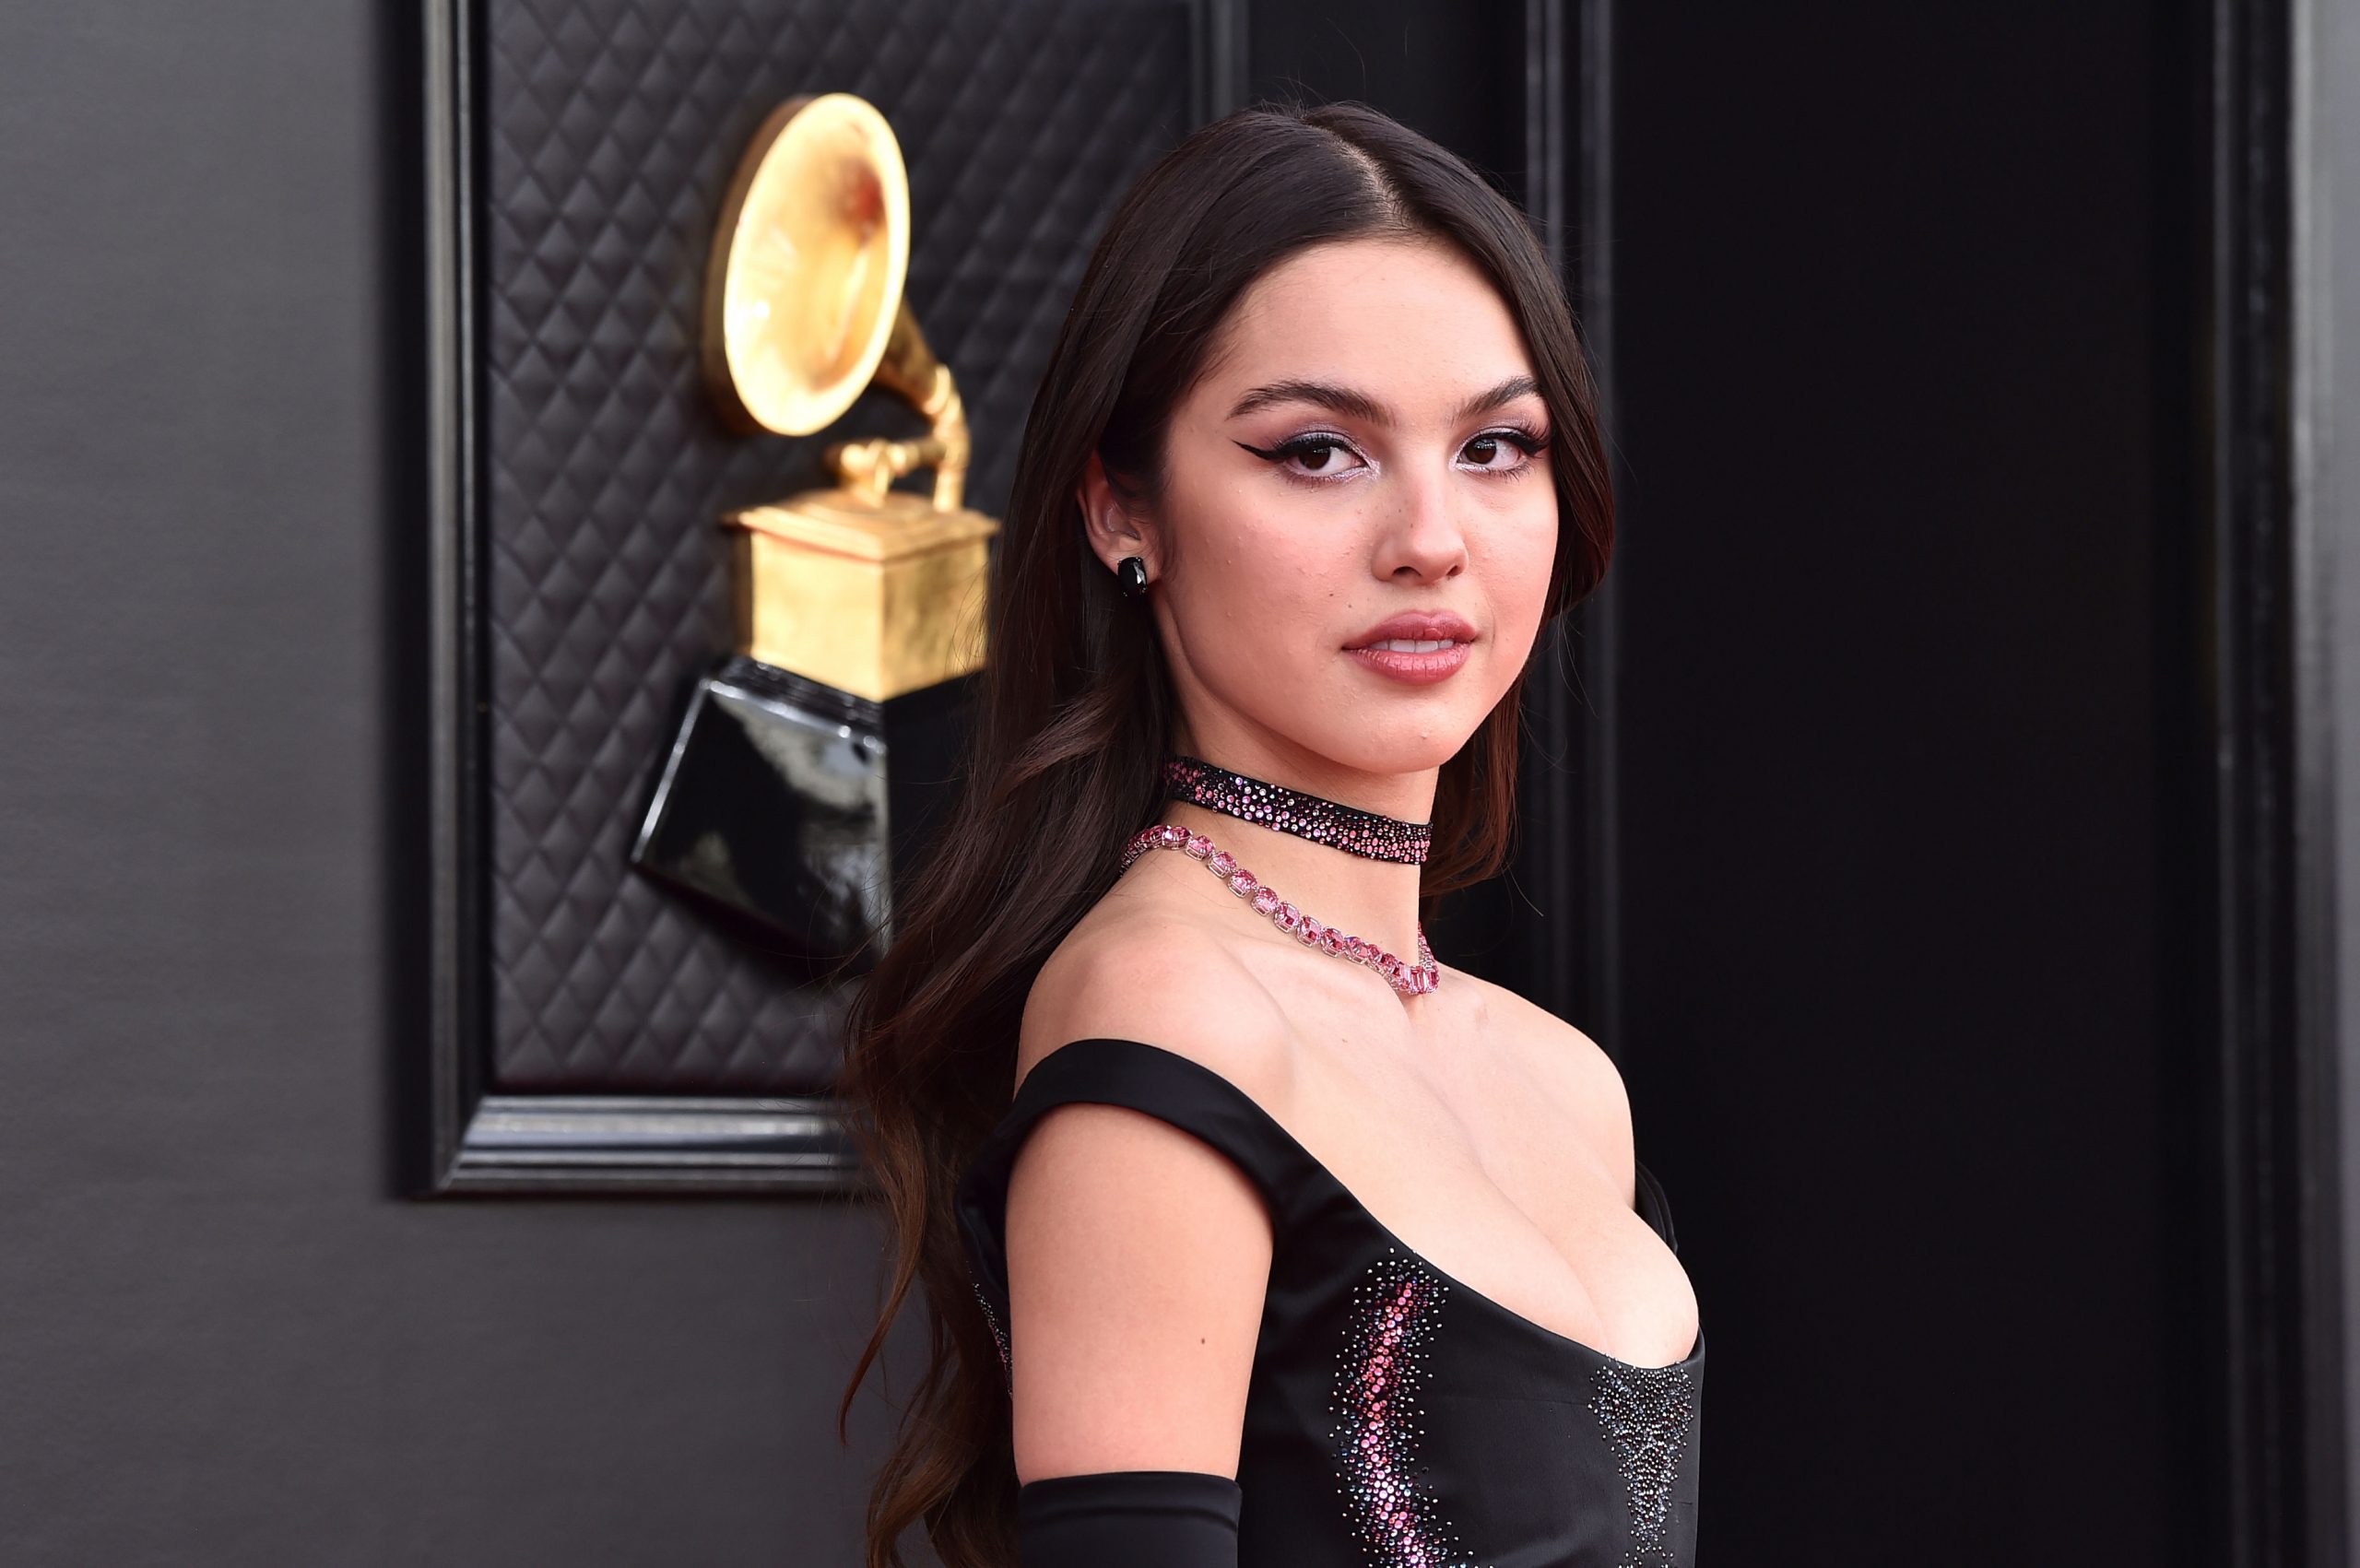 Grammy Awards 2022: Olivia Rodrigo’s red carpet look has fans crushing on her